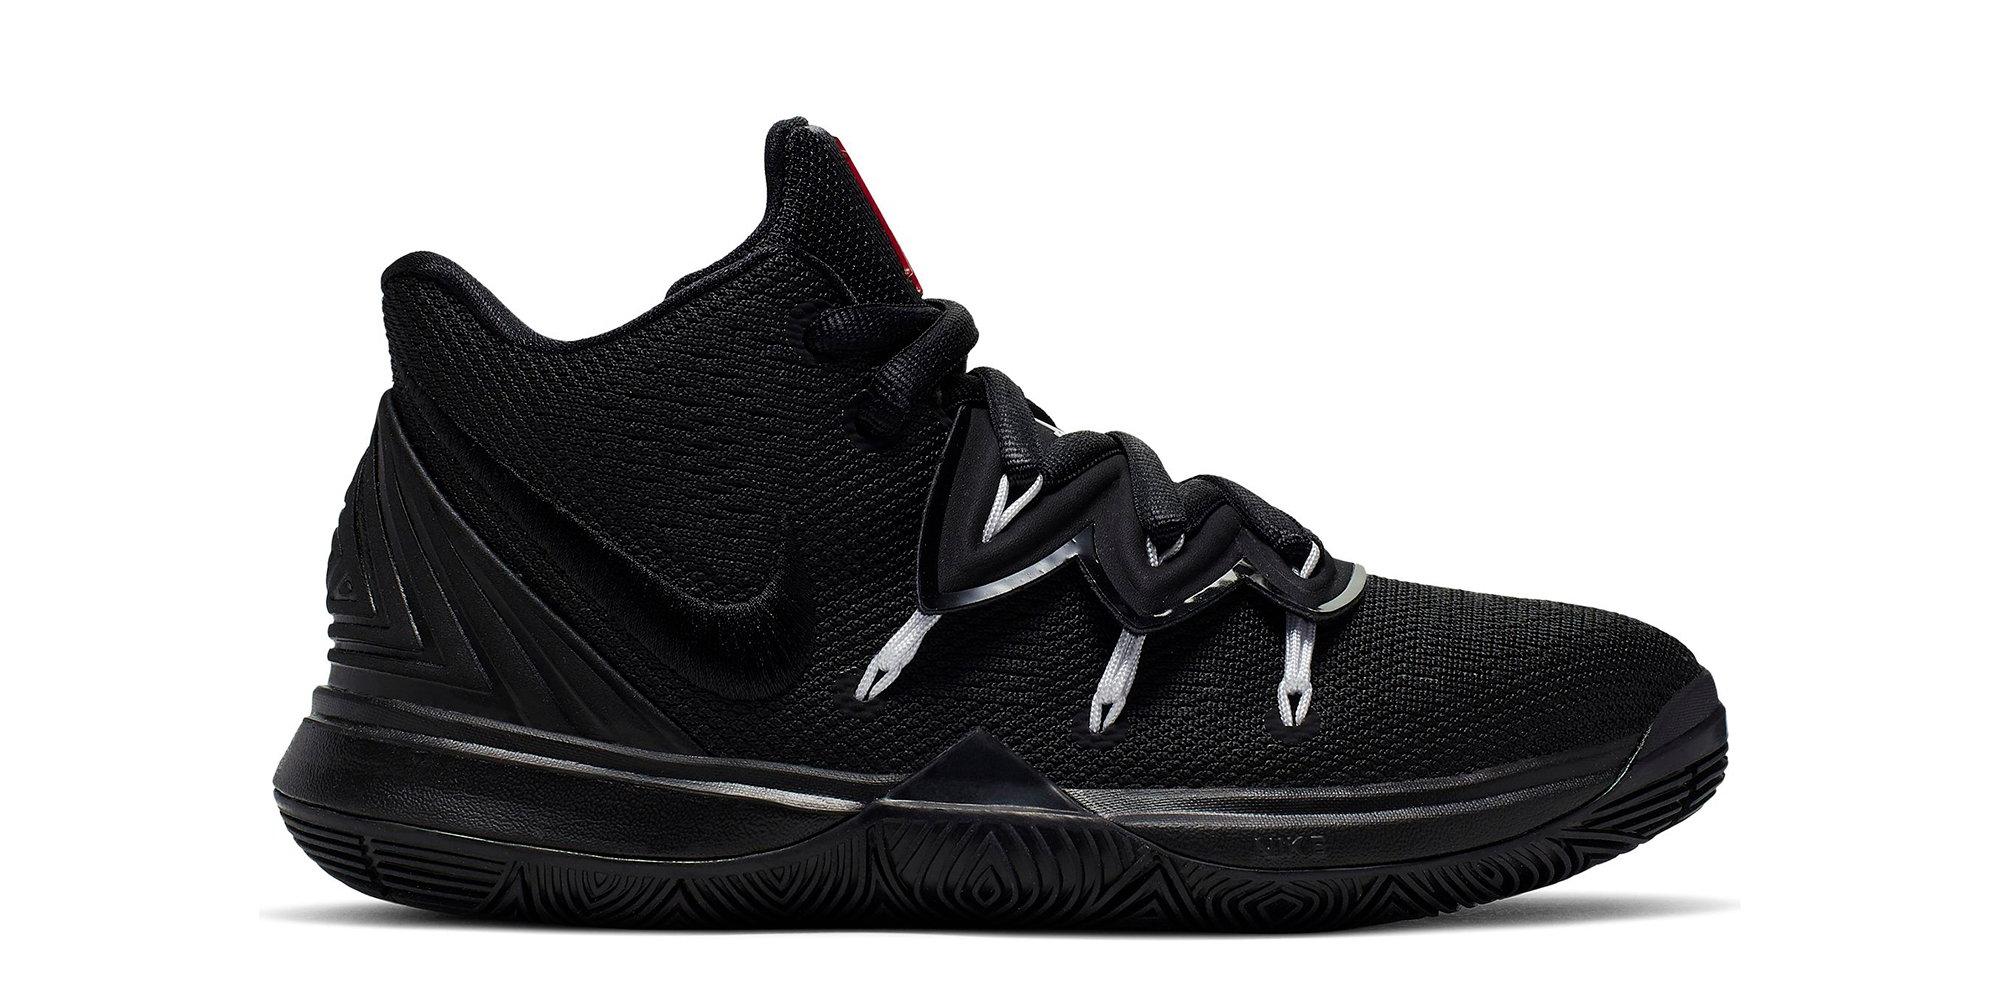 Sneaker Release Nike Kyrie Irving 5 Red Carpet